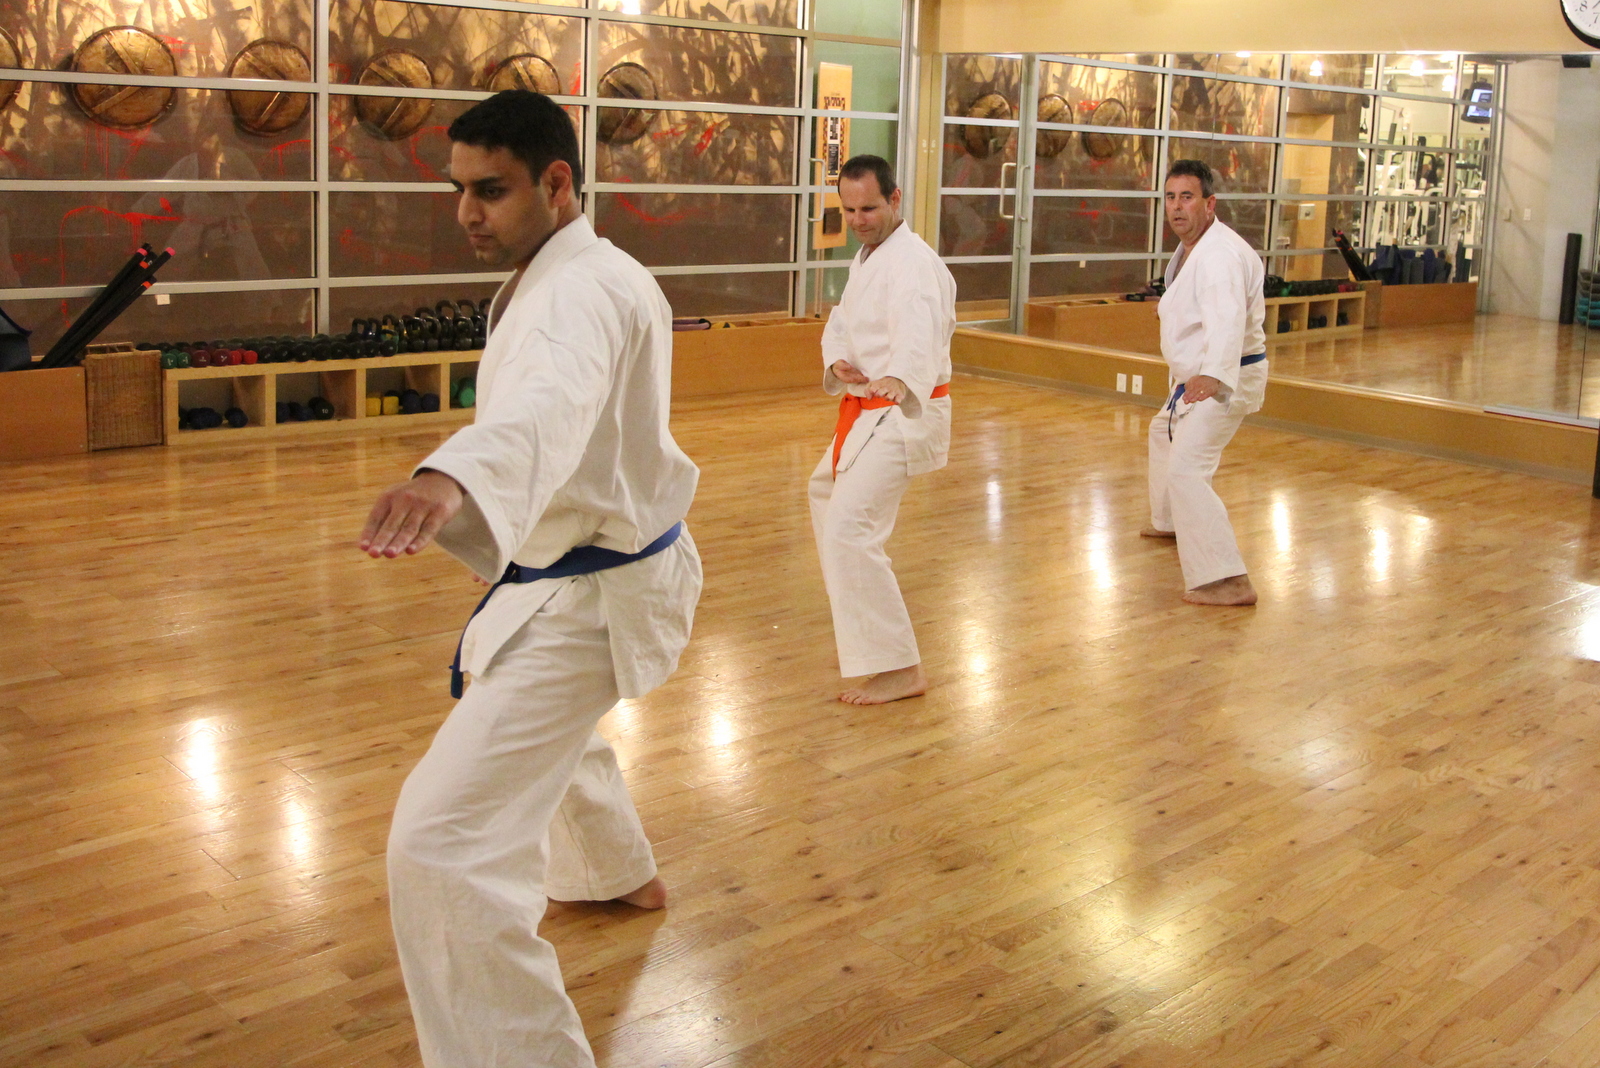 Jiu-jitsu ground fighting / grappling and Karate striking | Full